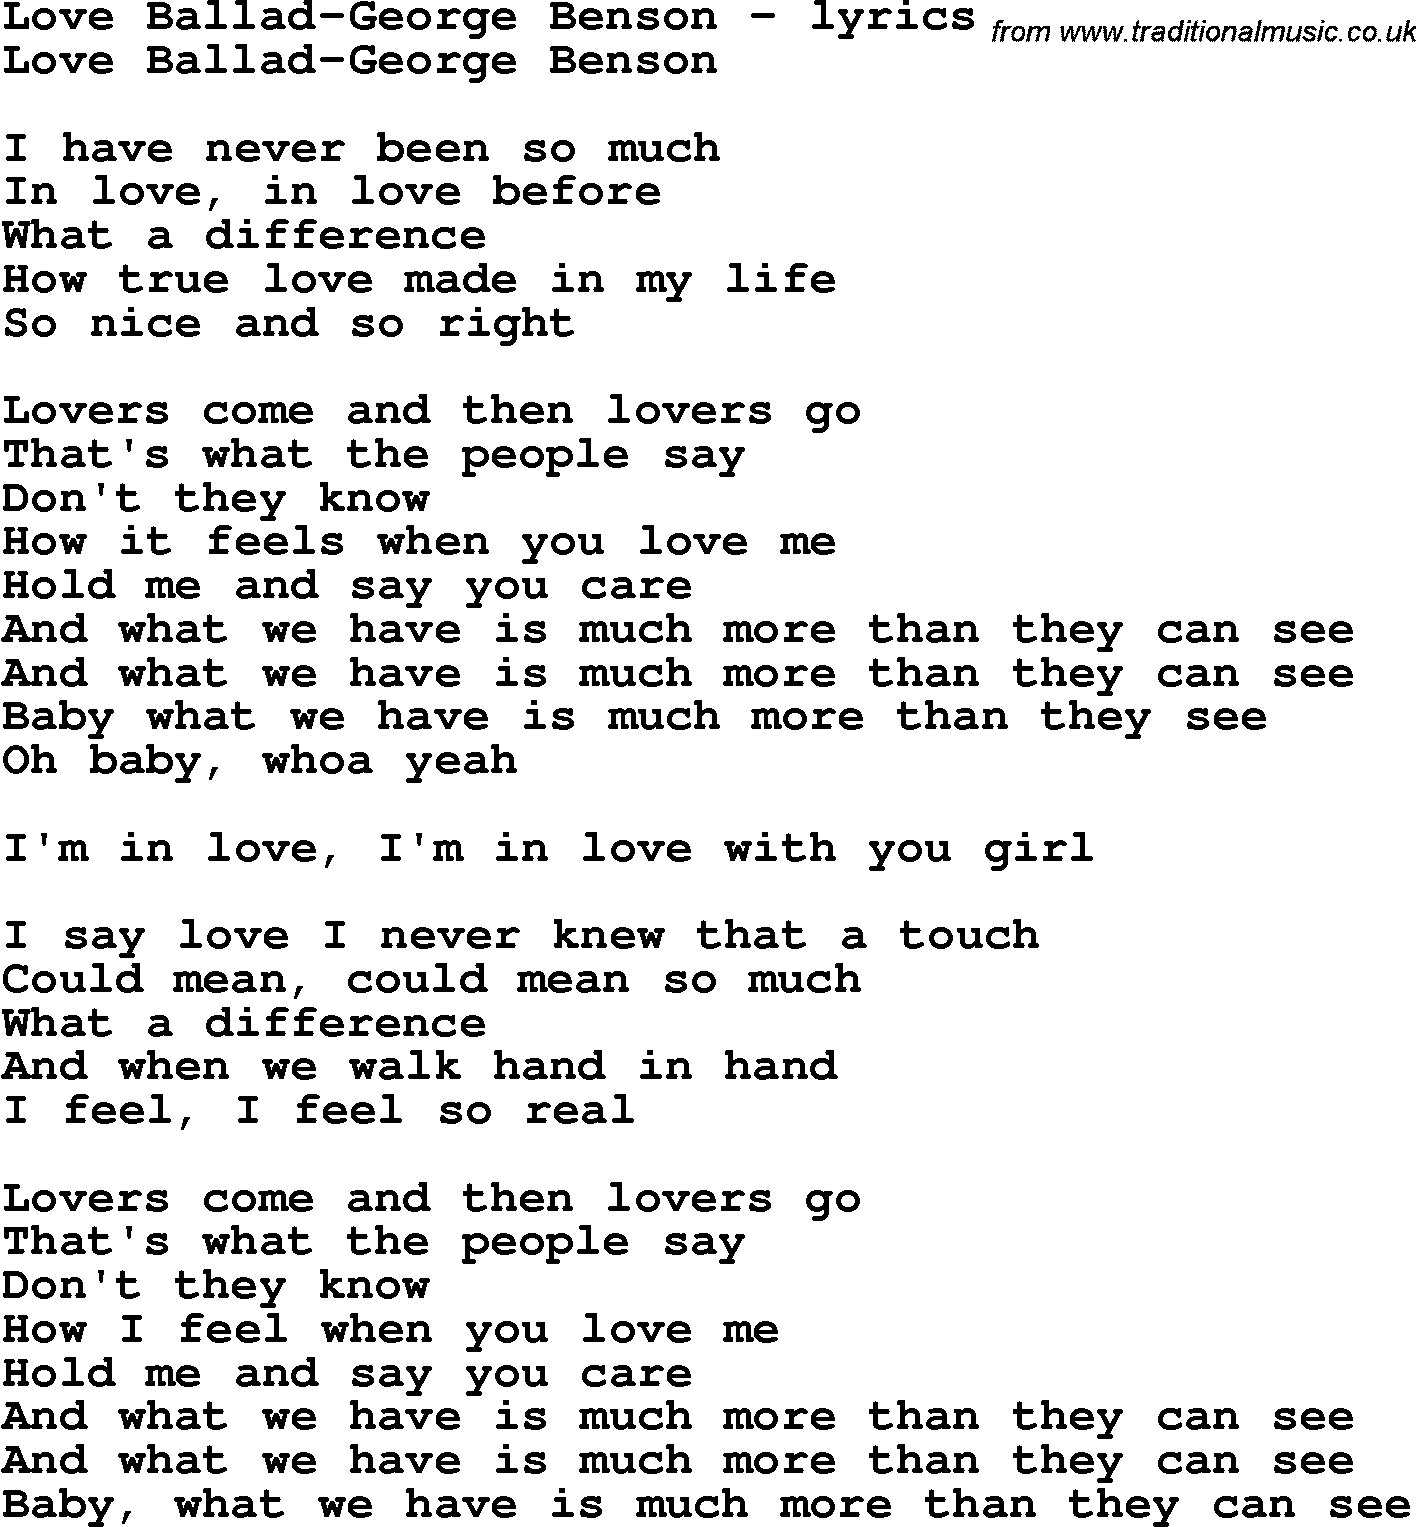 Love Song Lyrics for: Love Ballad-George Benson